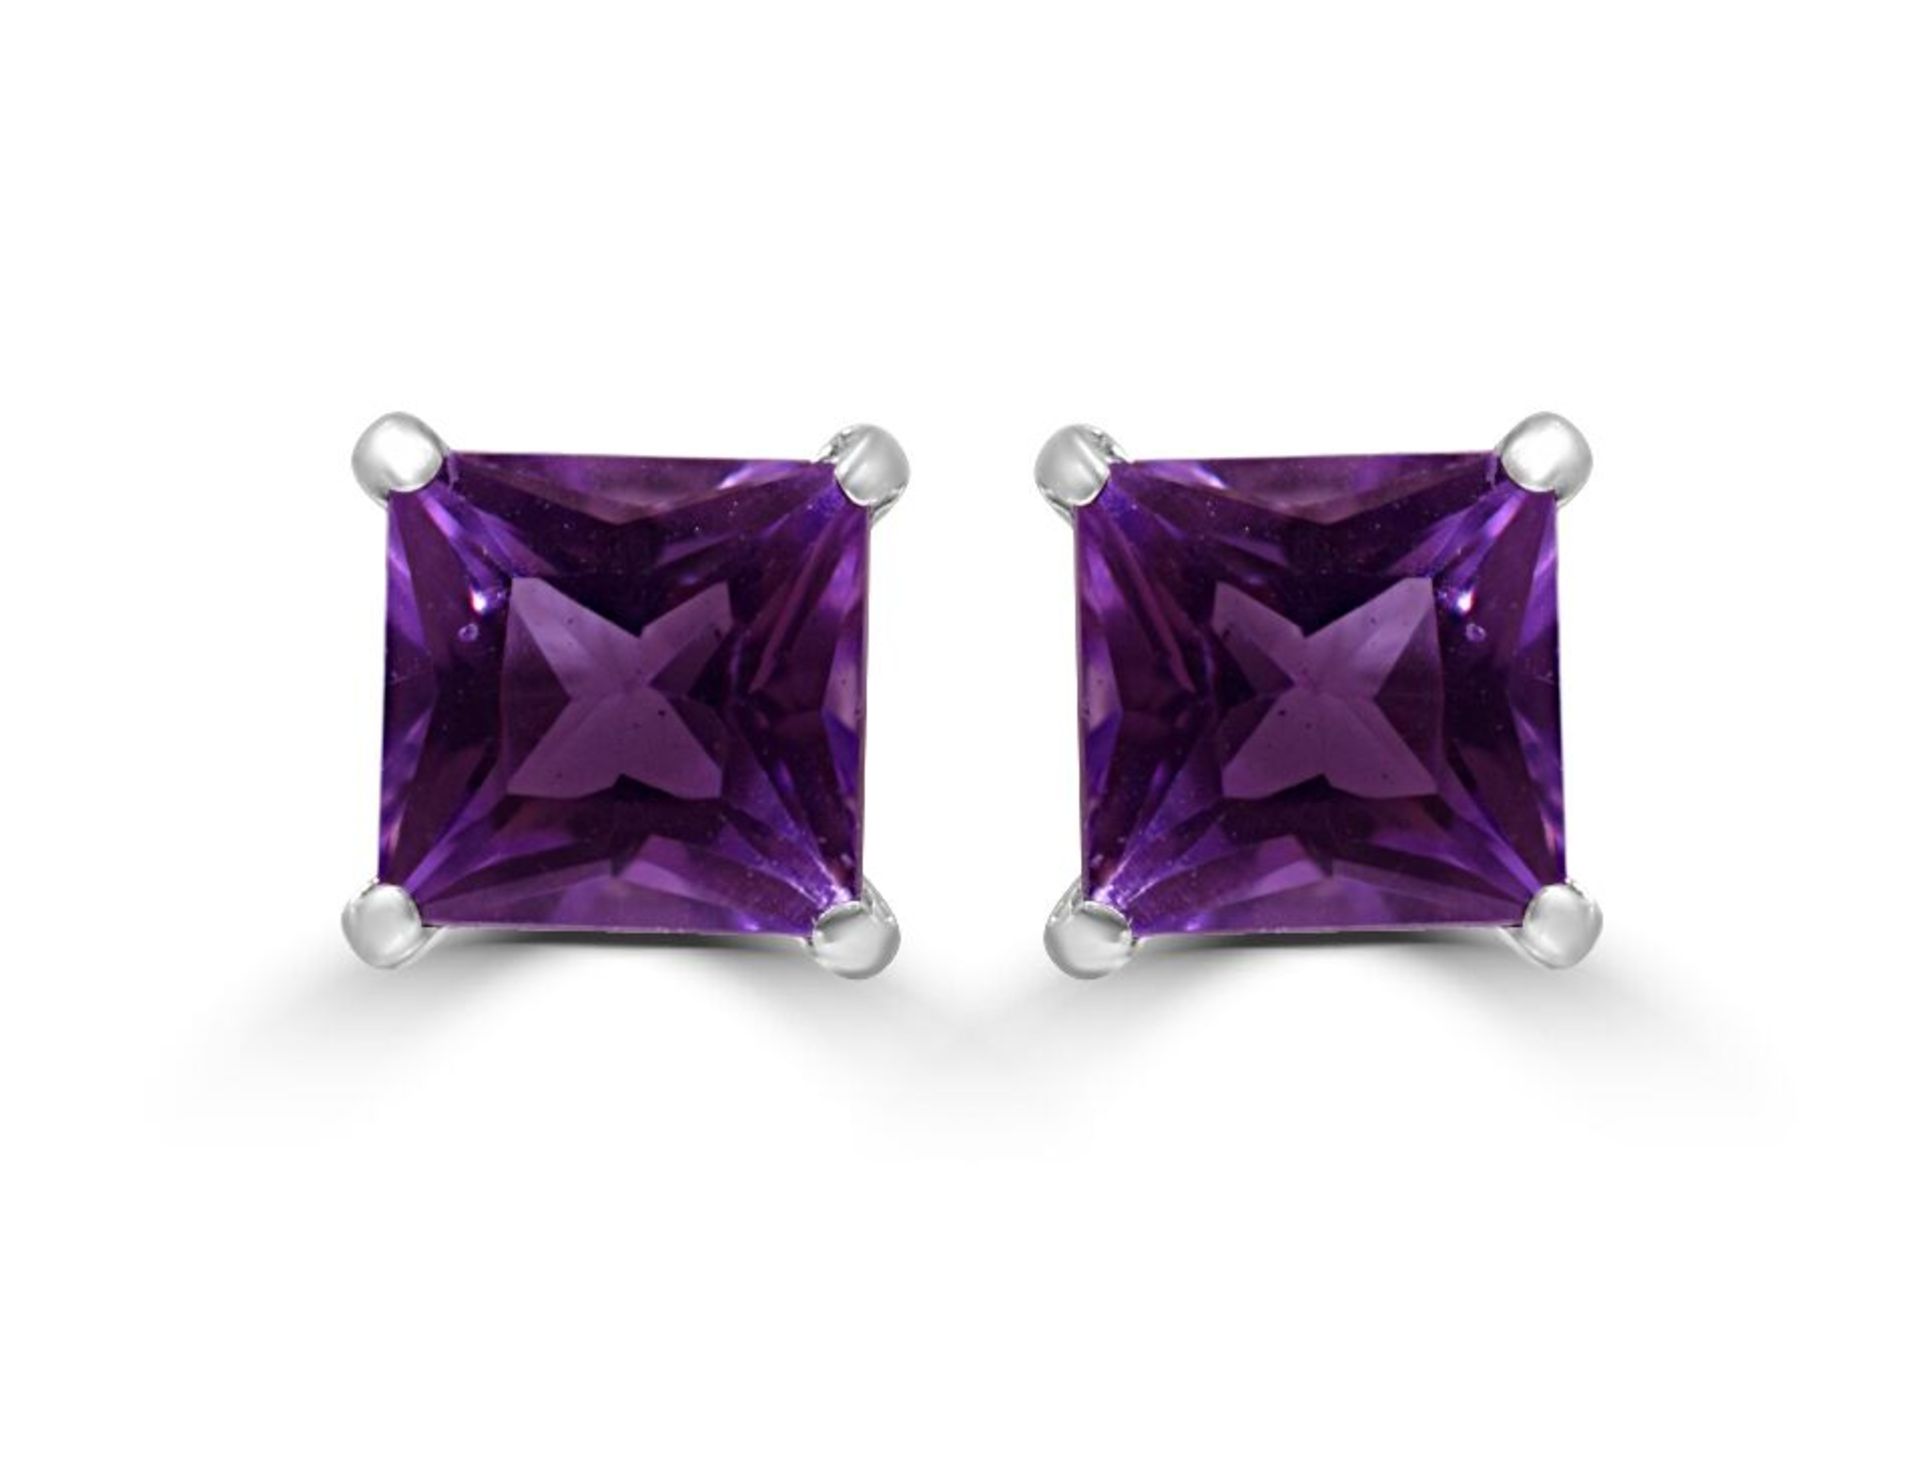 Square Cut Amethyst platinum stud earrings - 0.60ct natural gemstones